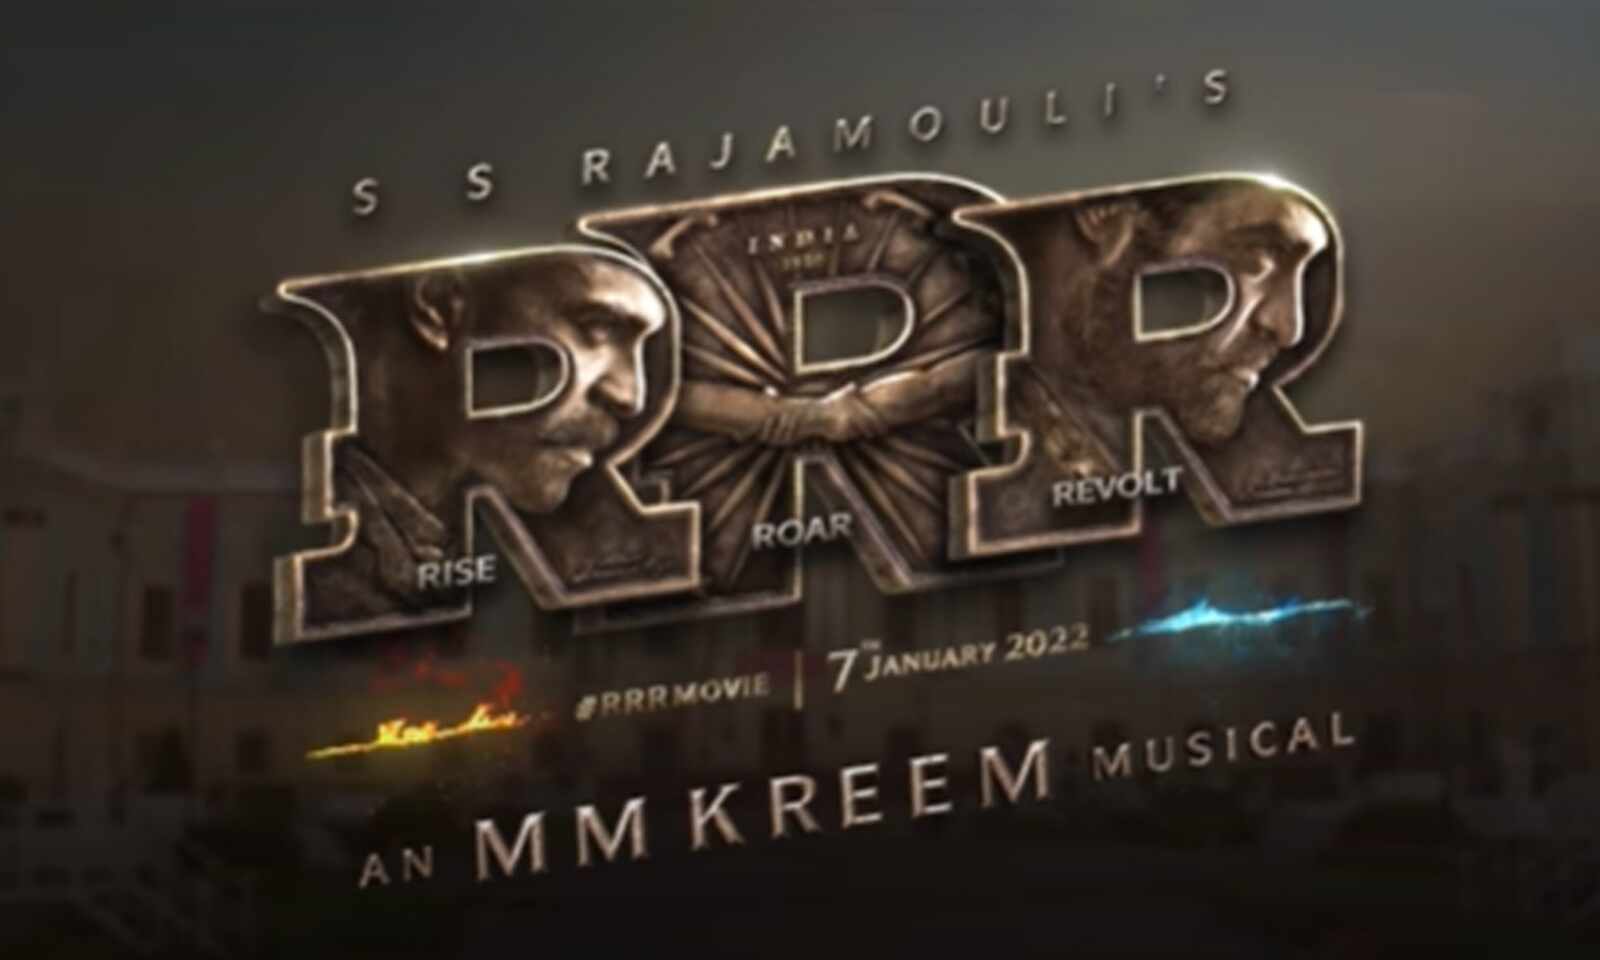 RRR movie logo - PNGBUY